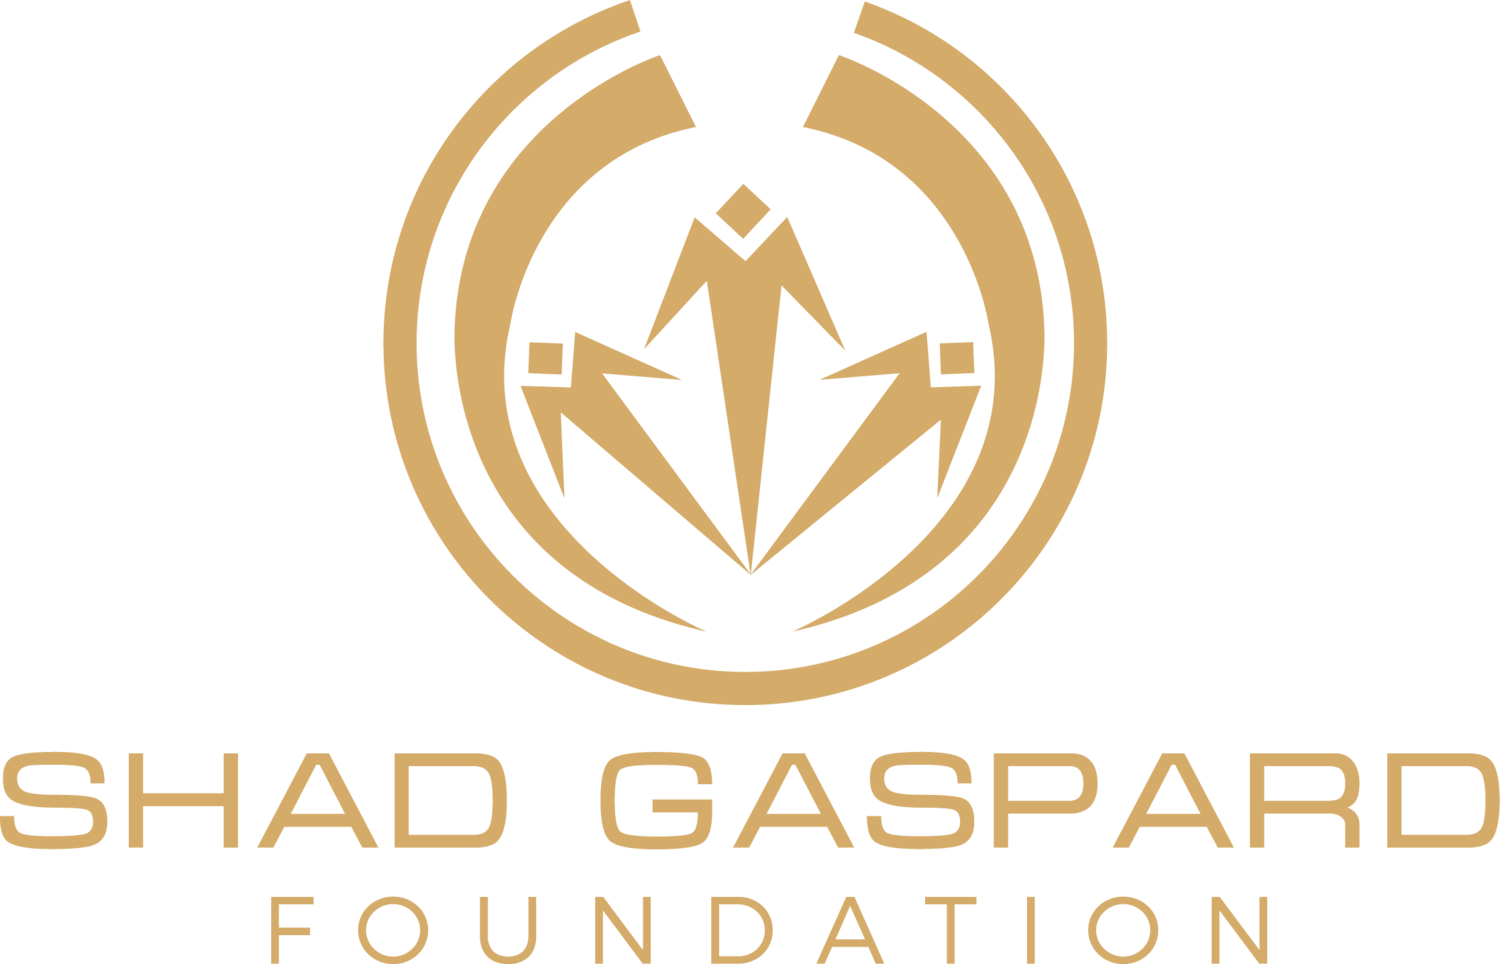 The Shad Gaspard Foundation